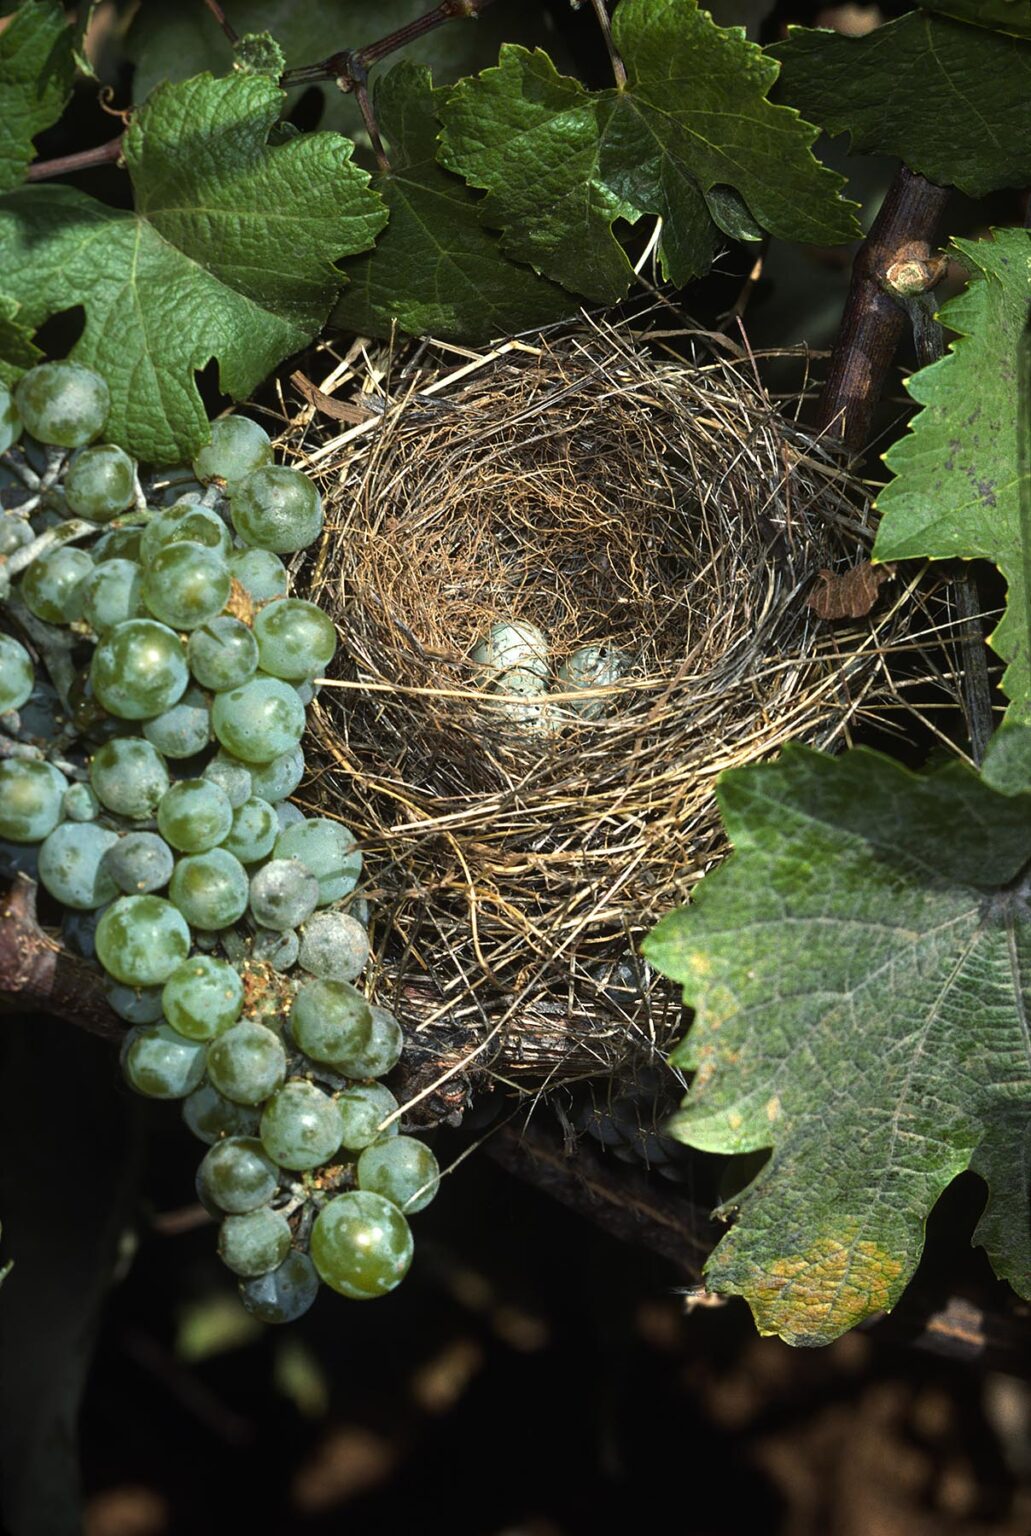 Bird nest found in CHARDONNAY GRAPE VINE at MADRONA VINEYARDS - CAMINO, CALIFORNIA